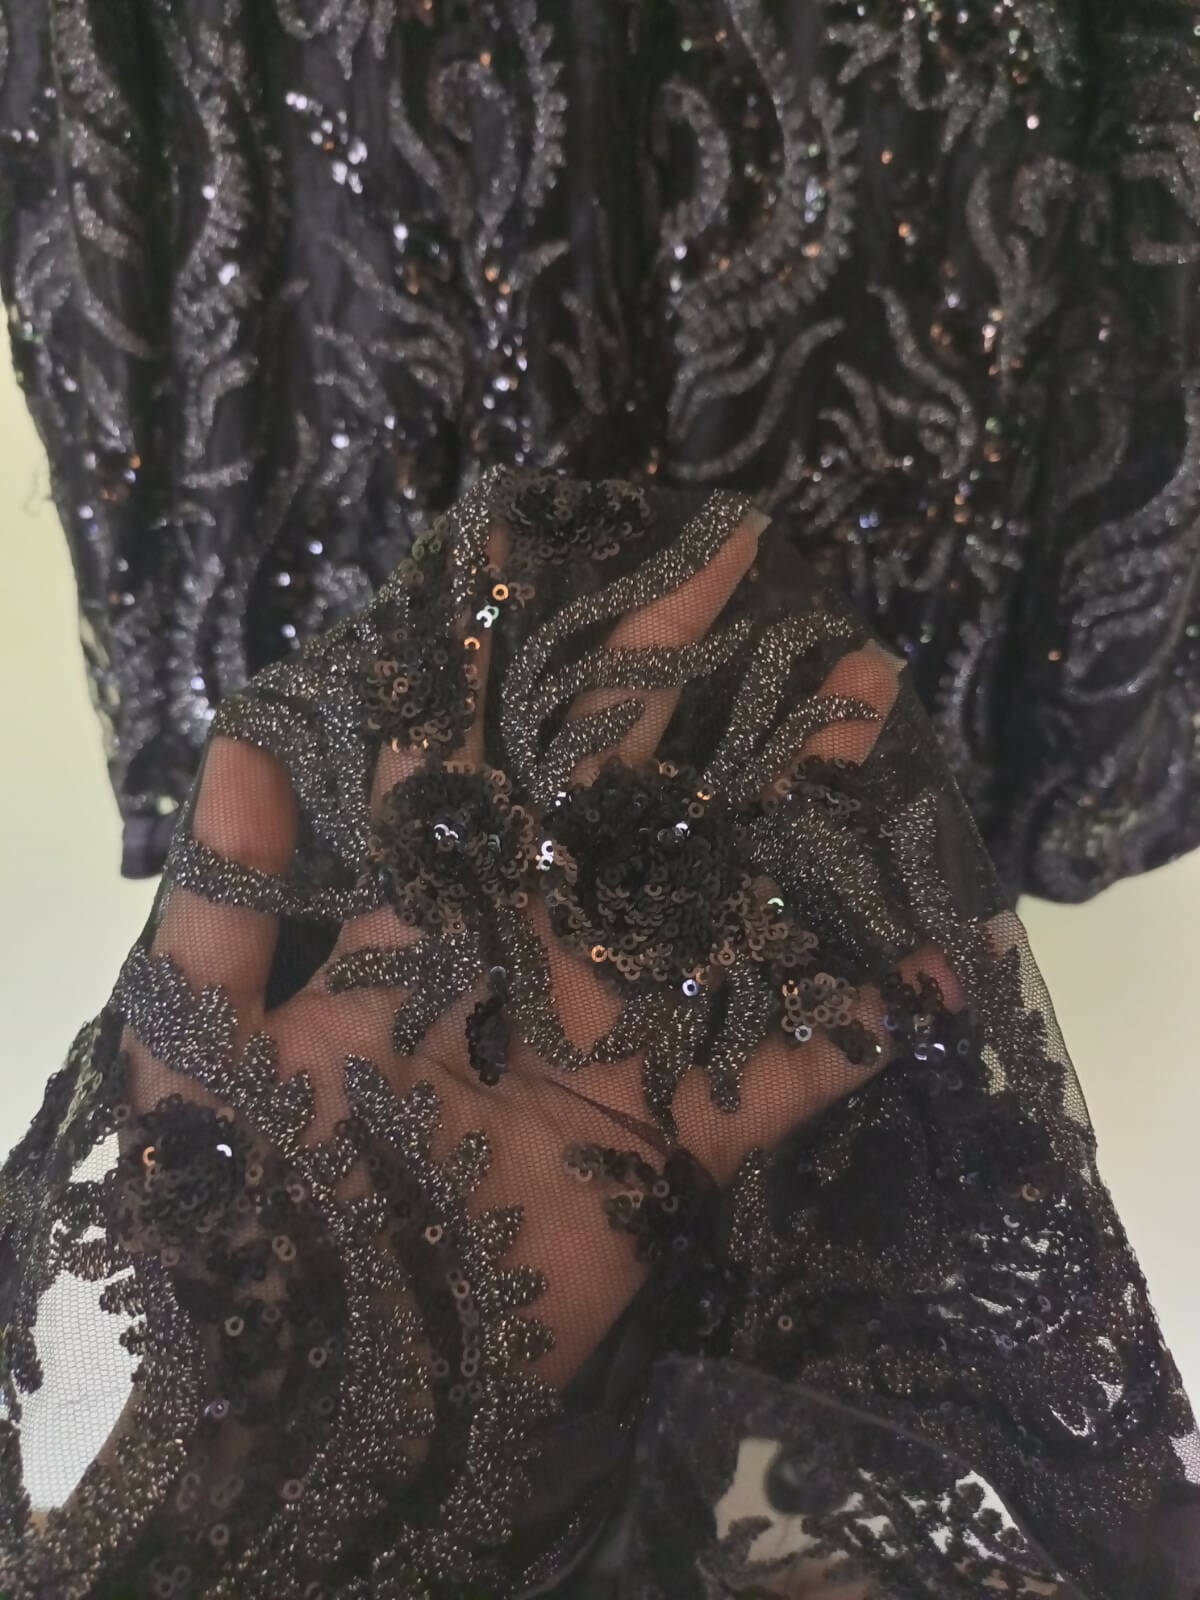 Black Fancy embroidered shirt with net dupatta, Women Formals